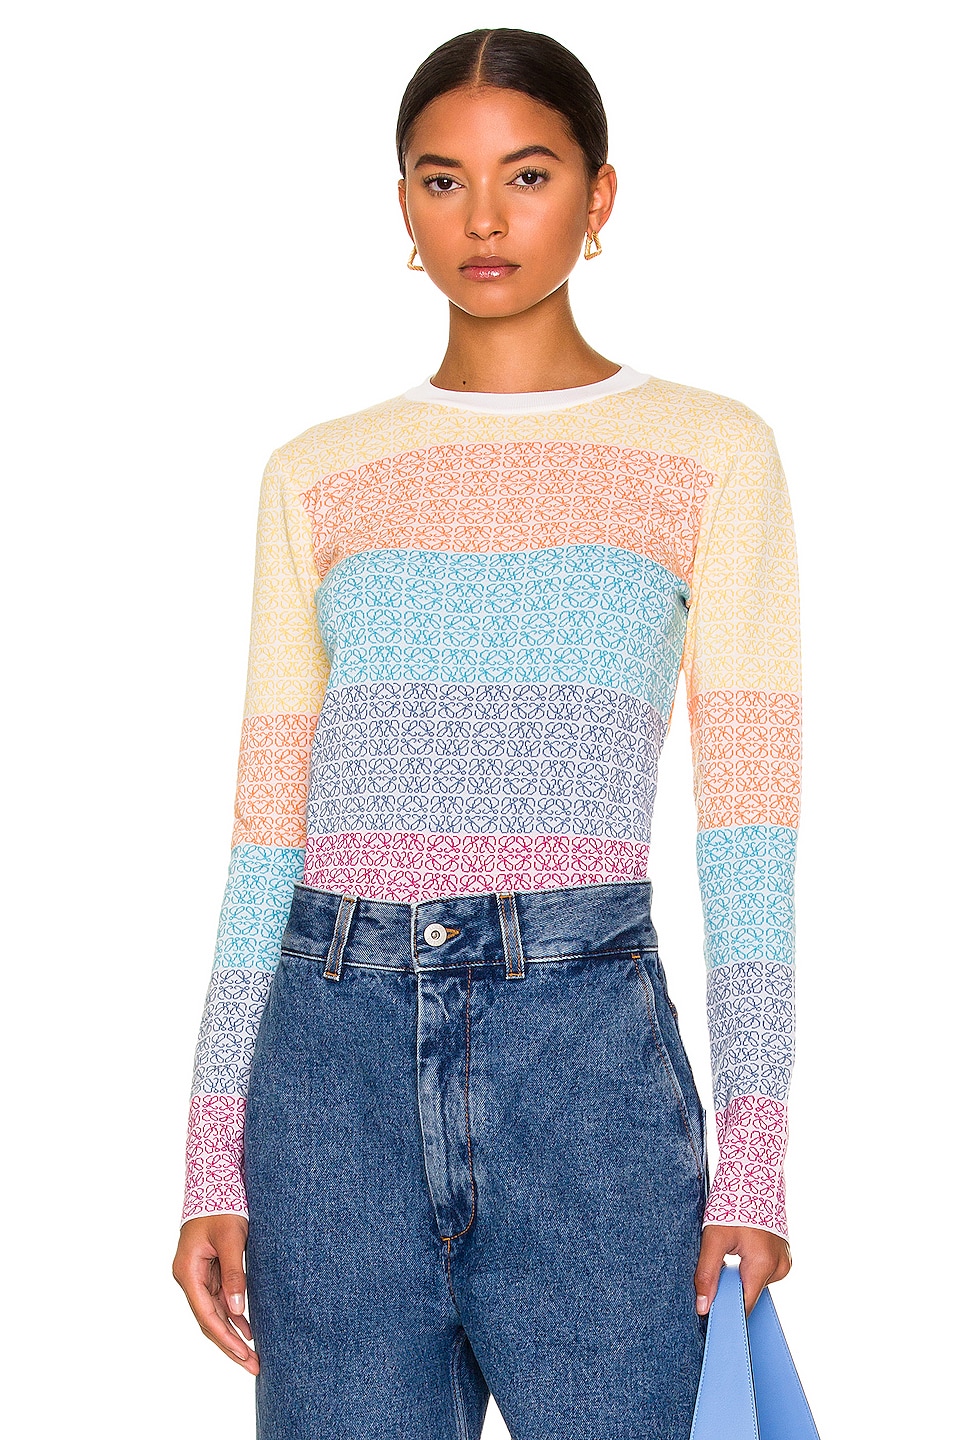 Loewe Anagram Jacquard Sweater in Multicolor & Ecru | FWRD